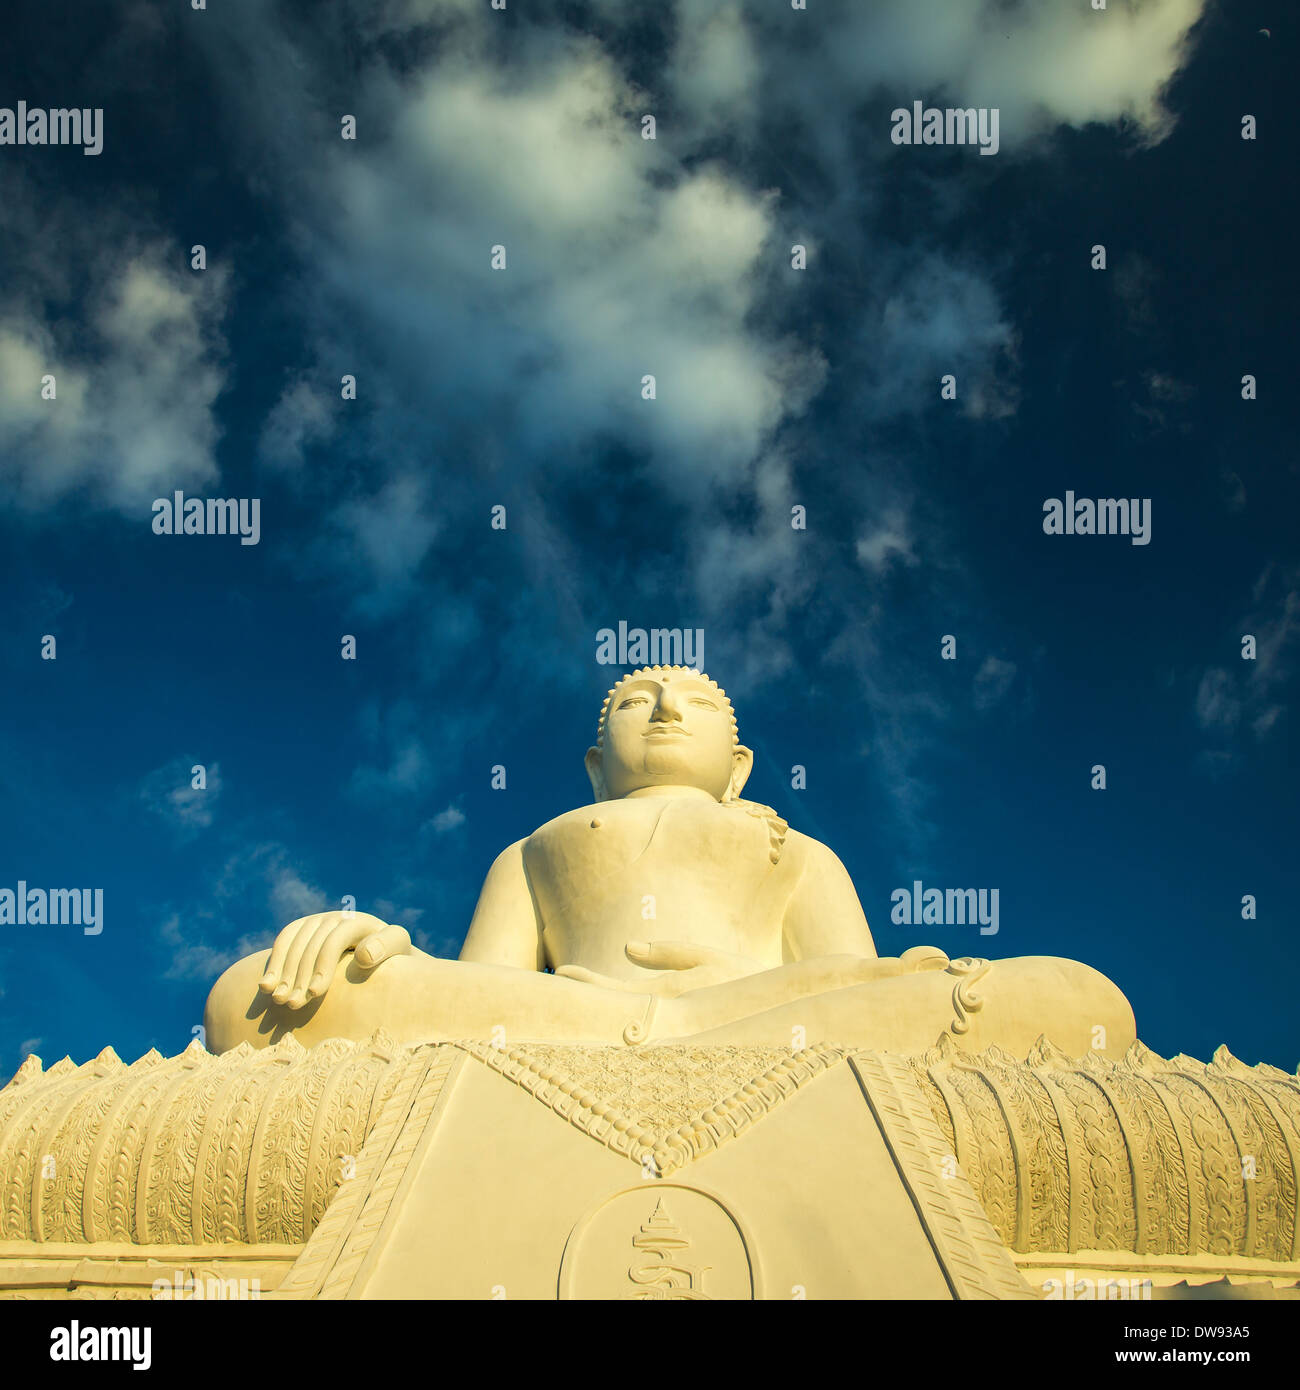 White Buddha statue against blue sky background Stock Photo